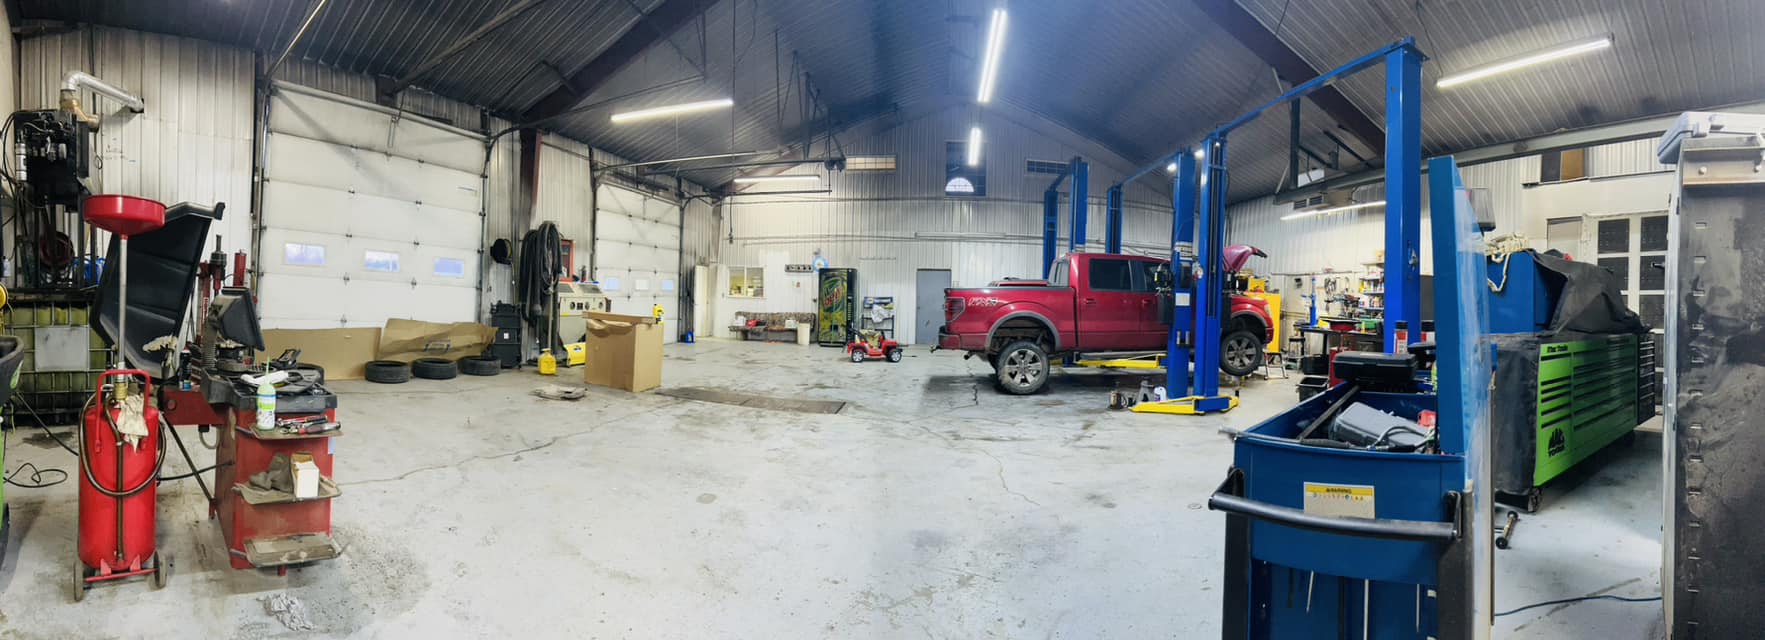 Big Bobs Auto/Truck Repair & Towing LLC 712 Co Rd 21, Beulah North Dakota 58523